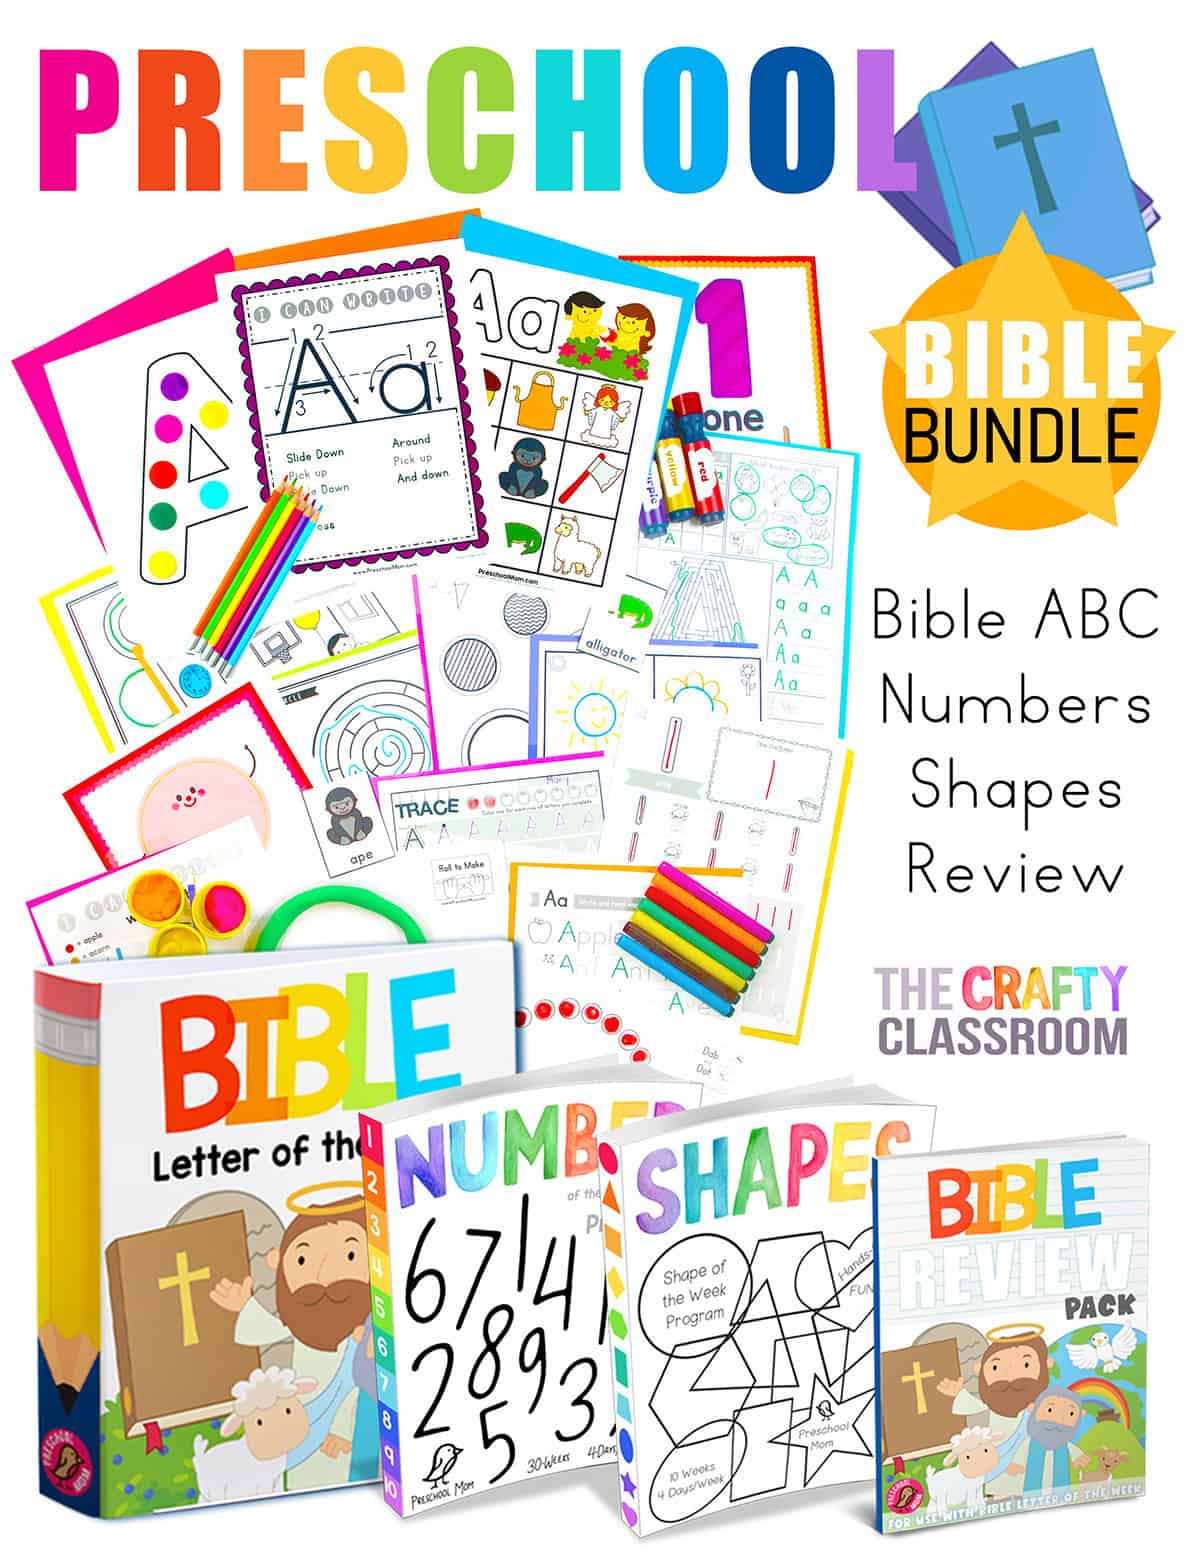 preschool-bible-verse-printables-christian-preschool-printables